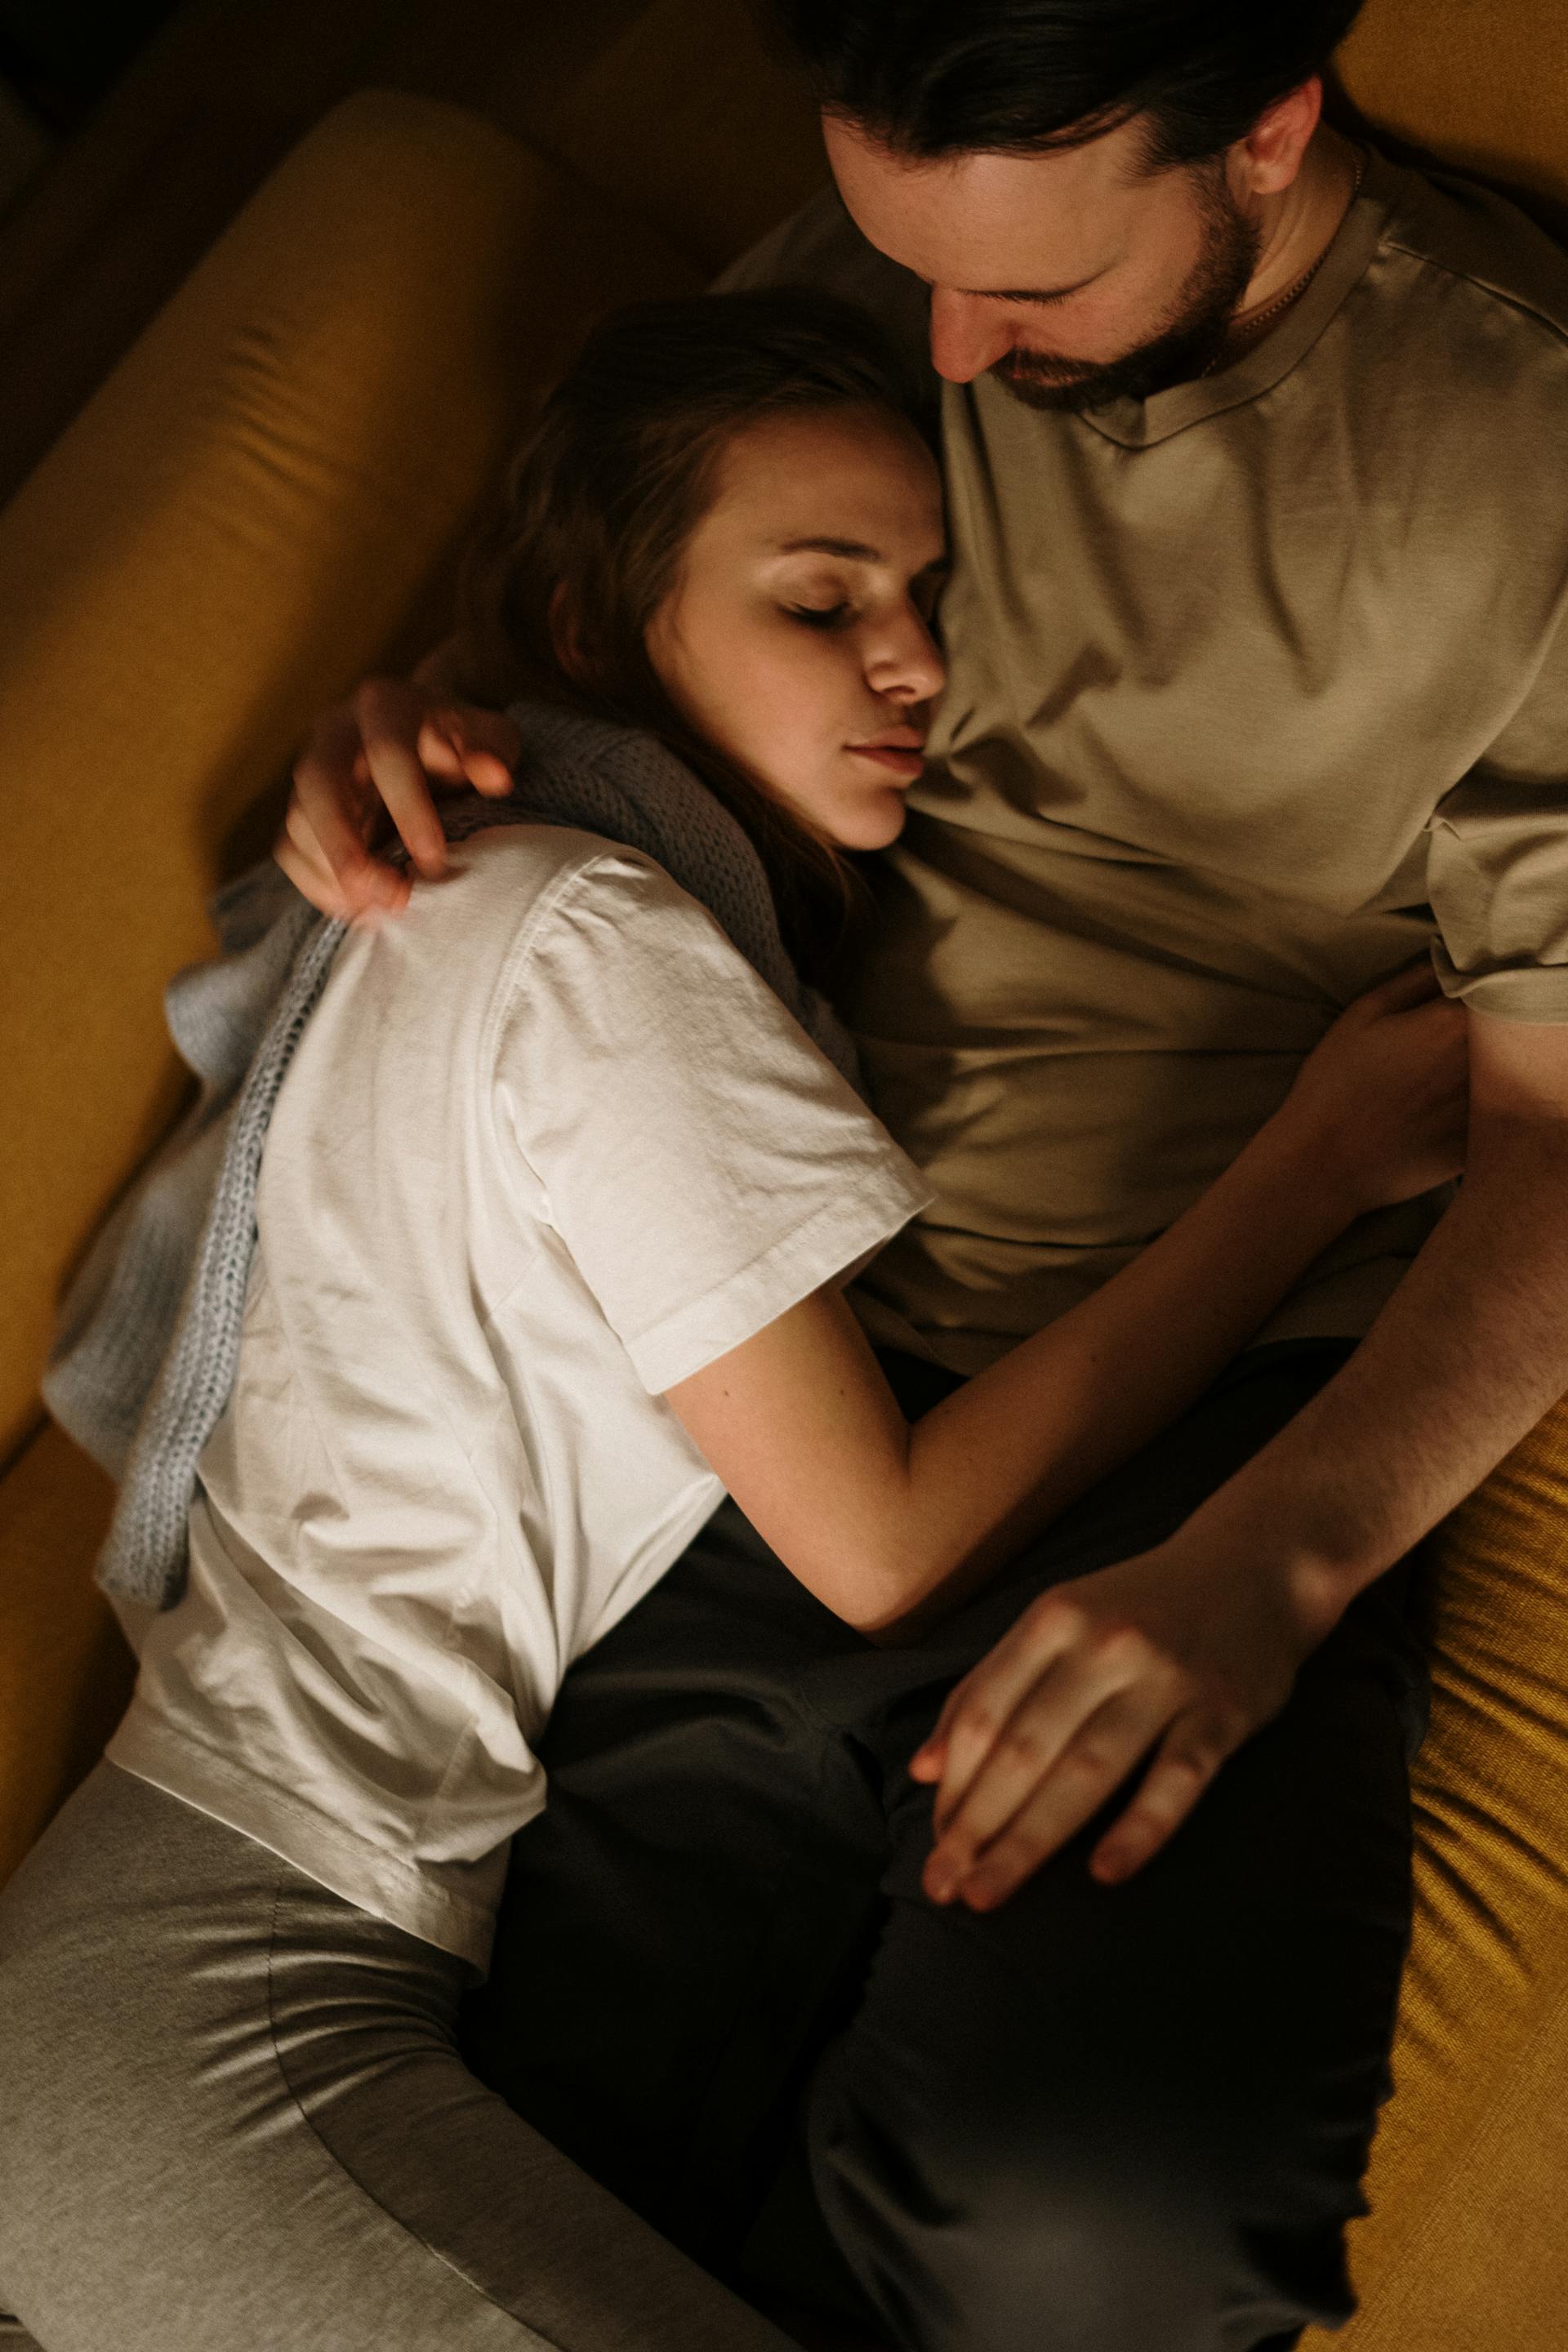 A couple cuddling | Source: Pexels